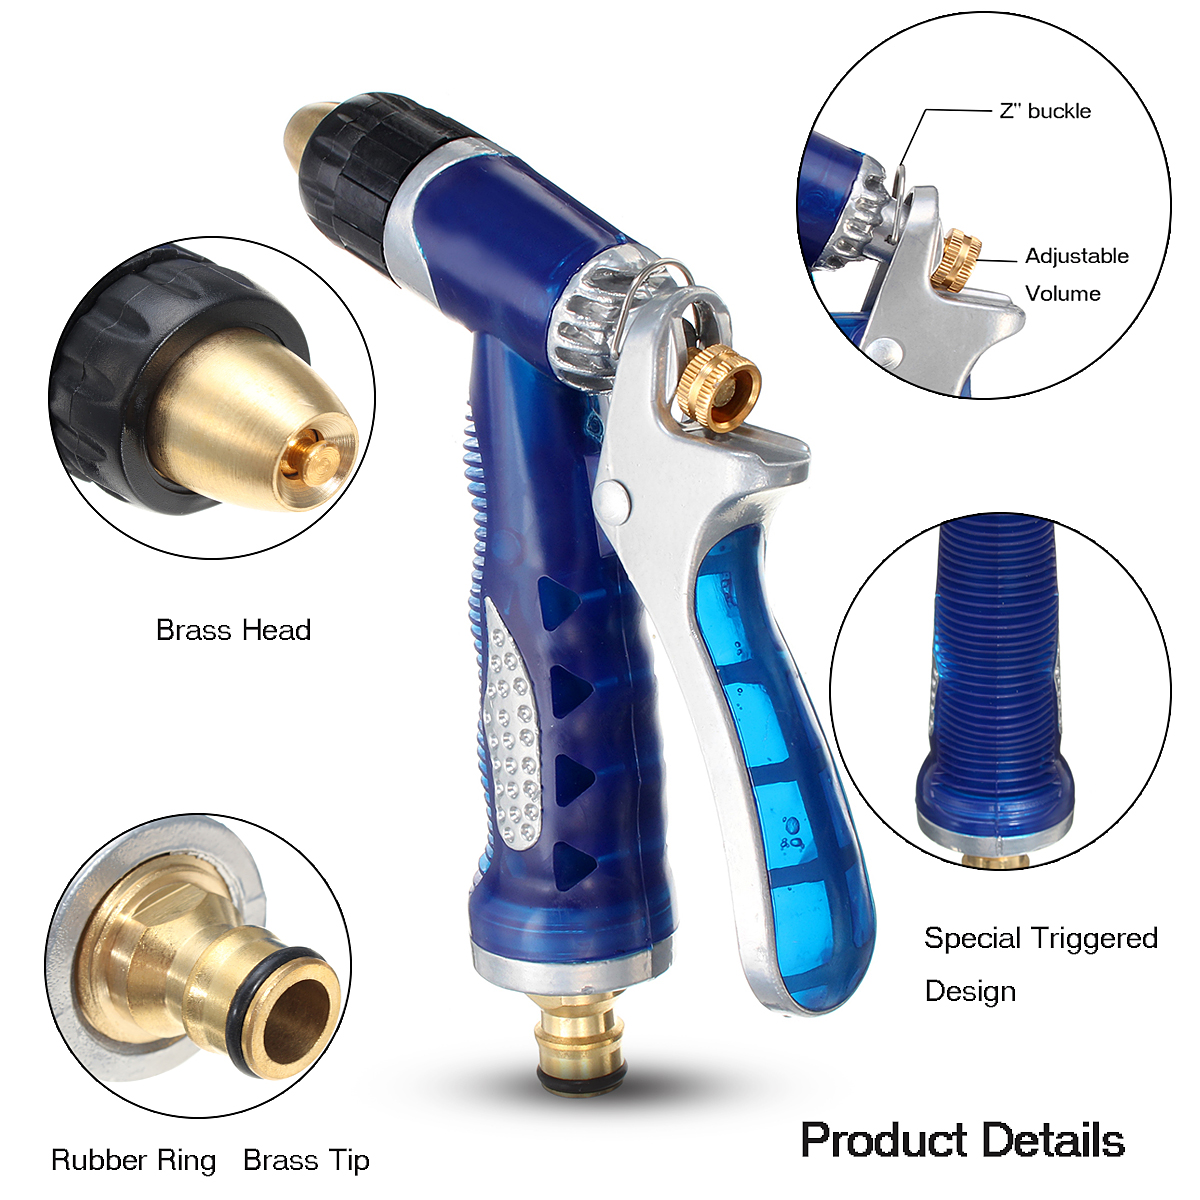 Garden-Water-Hose-Nozzle-Jet-Spray-Gun-High-Pressure-Adjustable-Watering-1320583